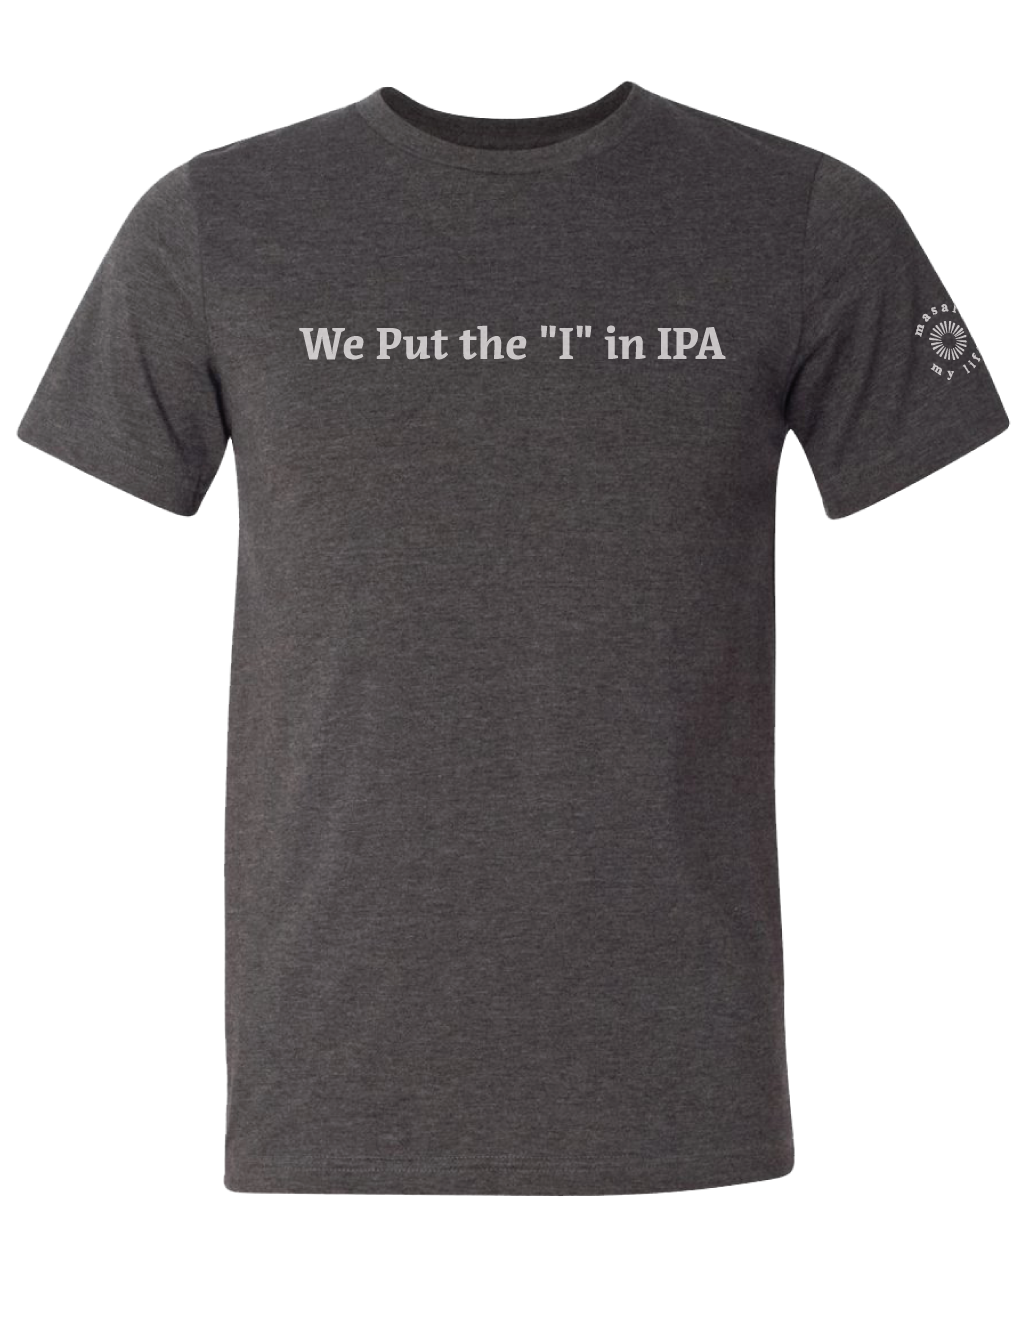 We Put the "I" in IPA Tee (Dark Gray Heather) - Masala My Life